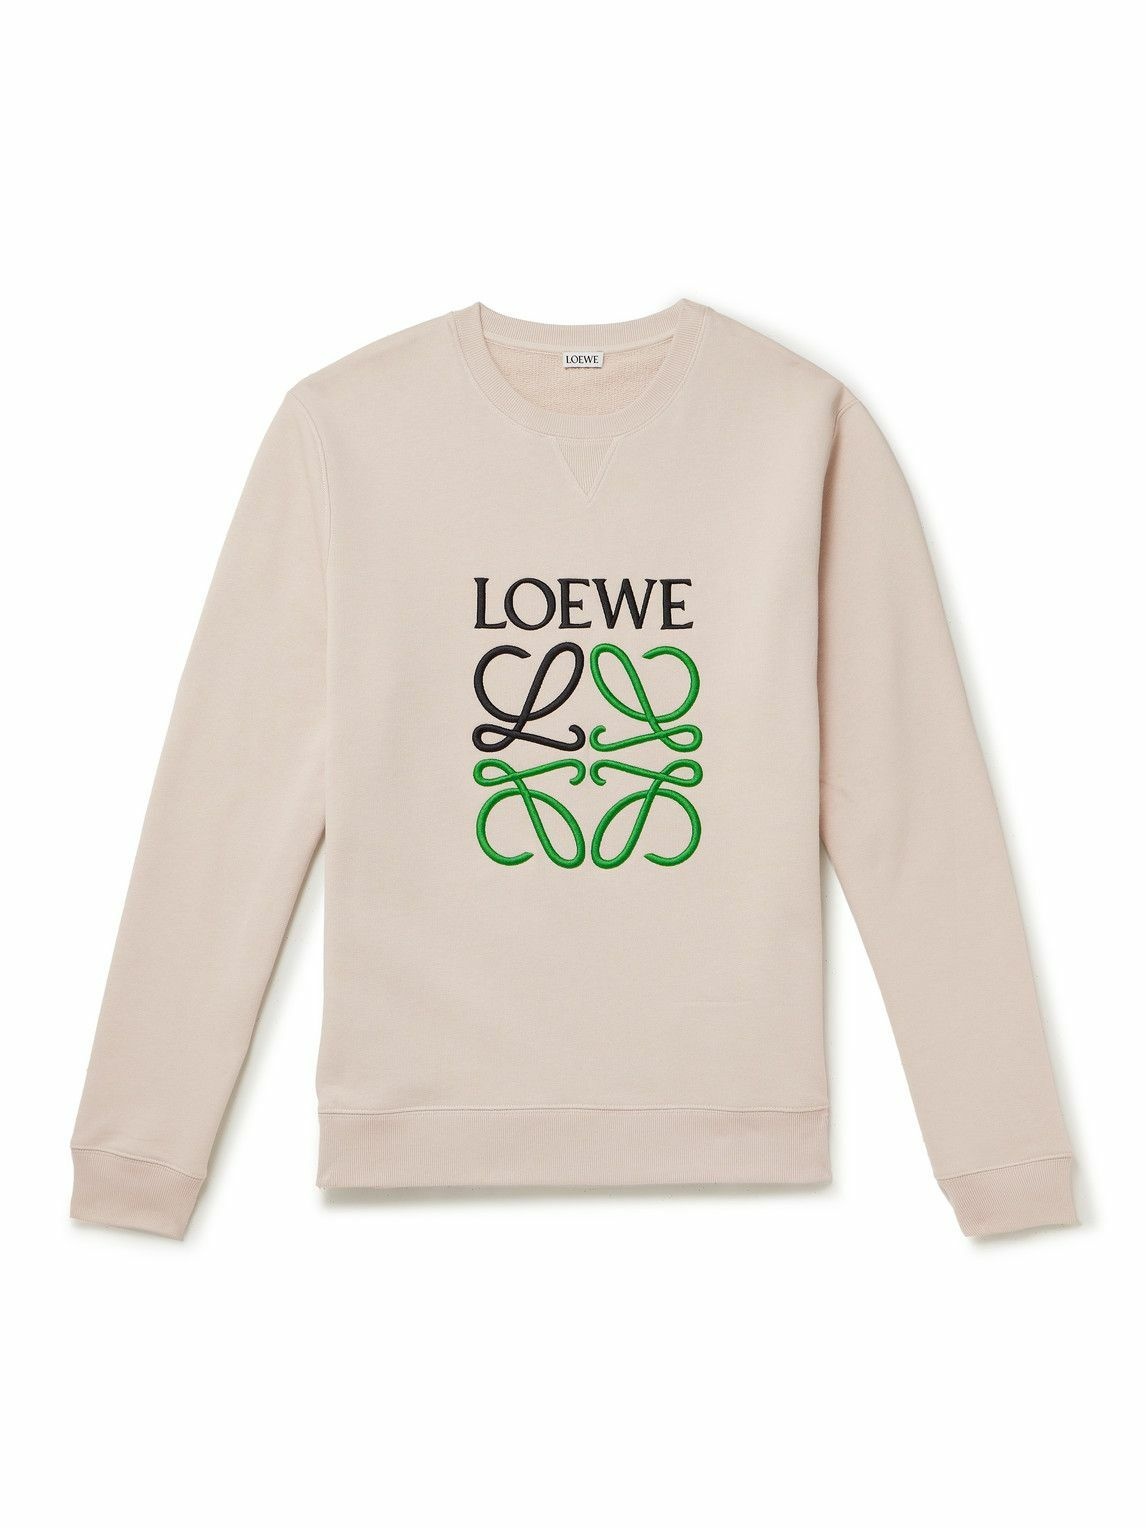 LOEWE - Logo-Embroidered Cotton-Jersey Sweatshirt - Neutrals Loewe